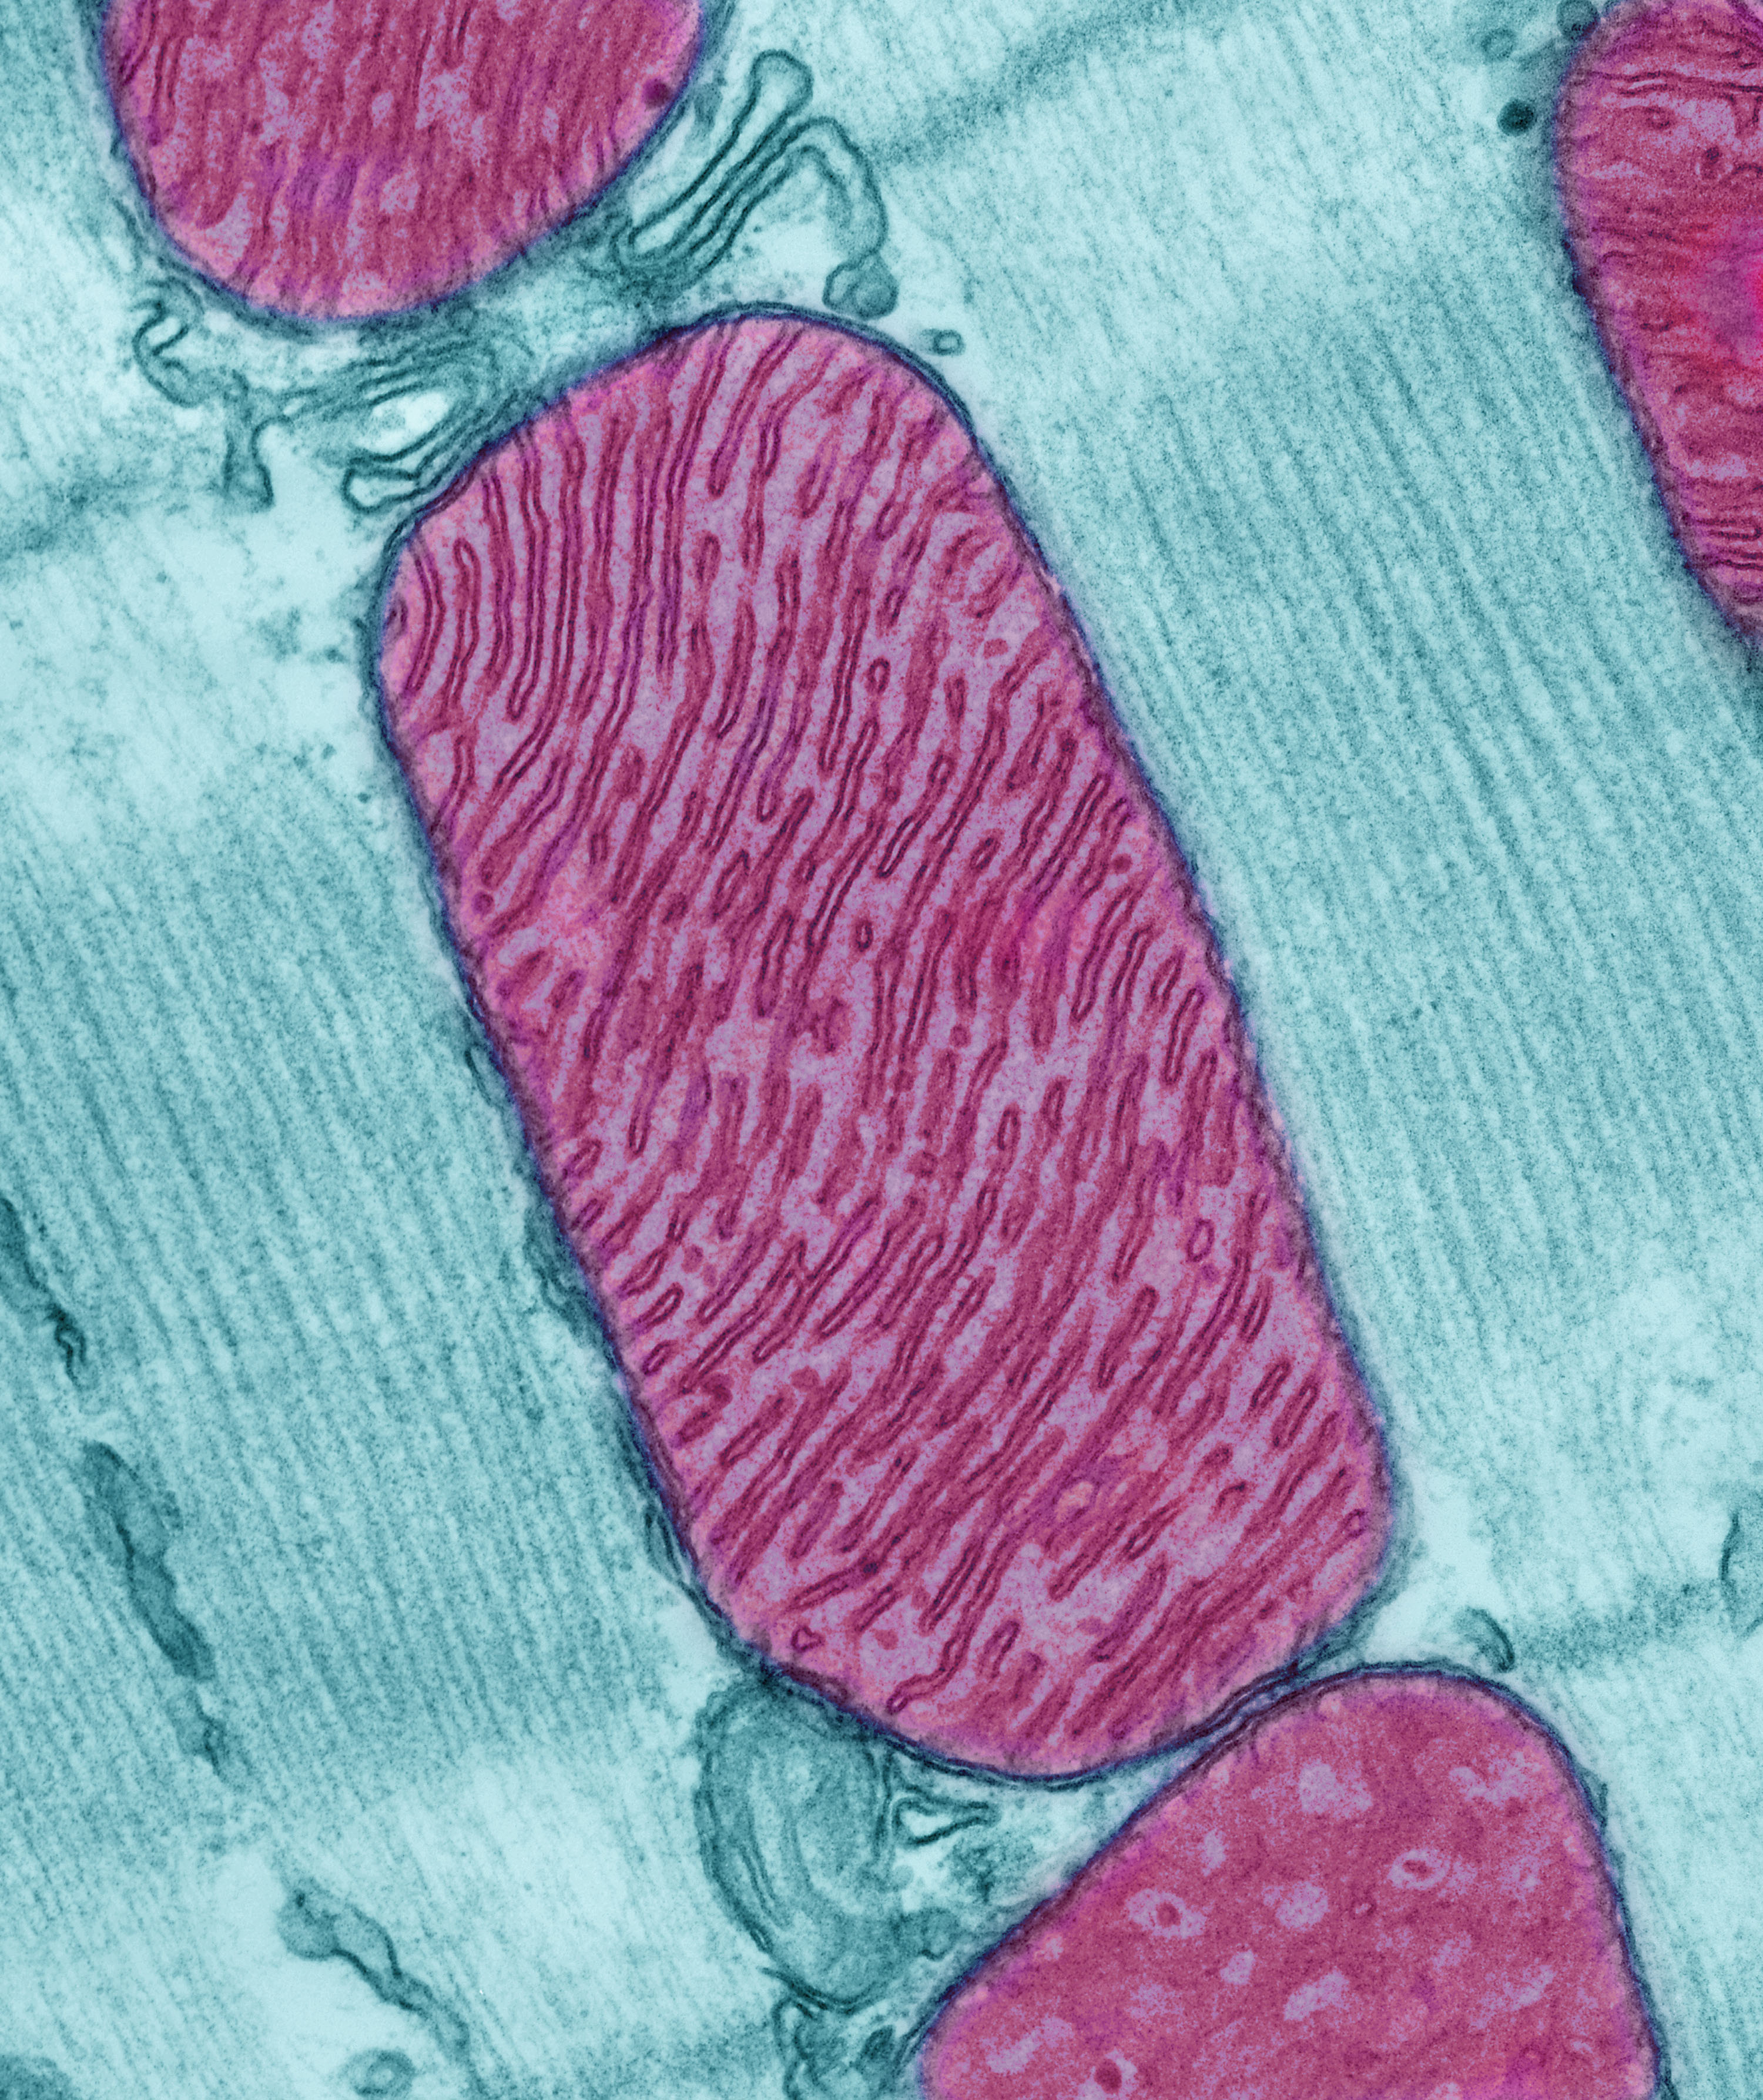 Image of mitochondria.